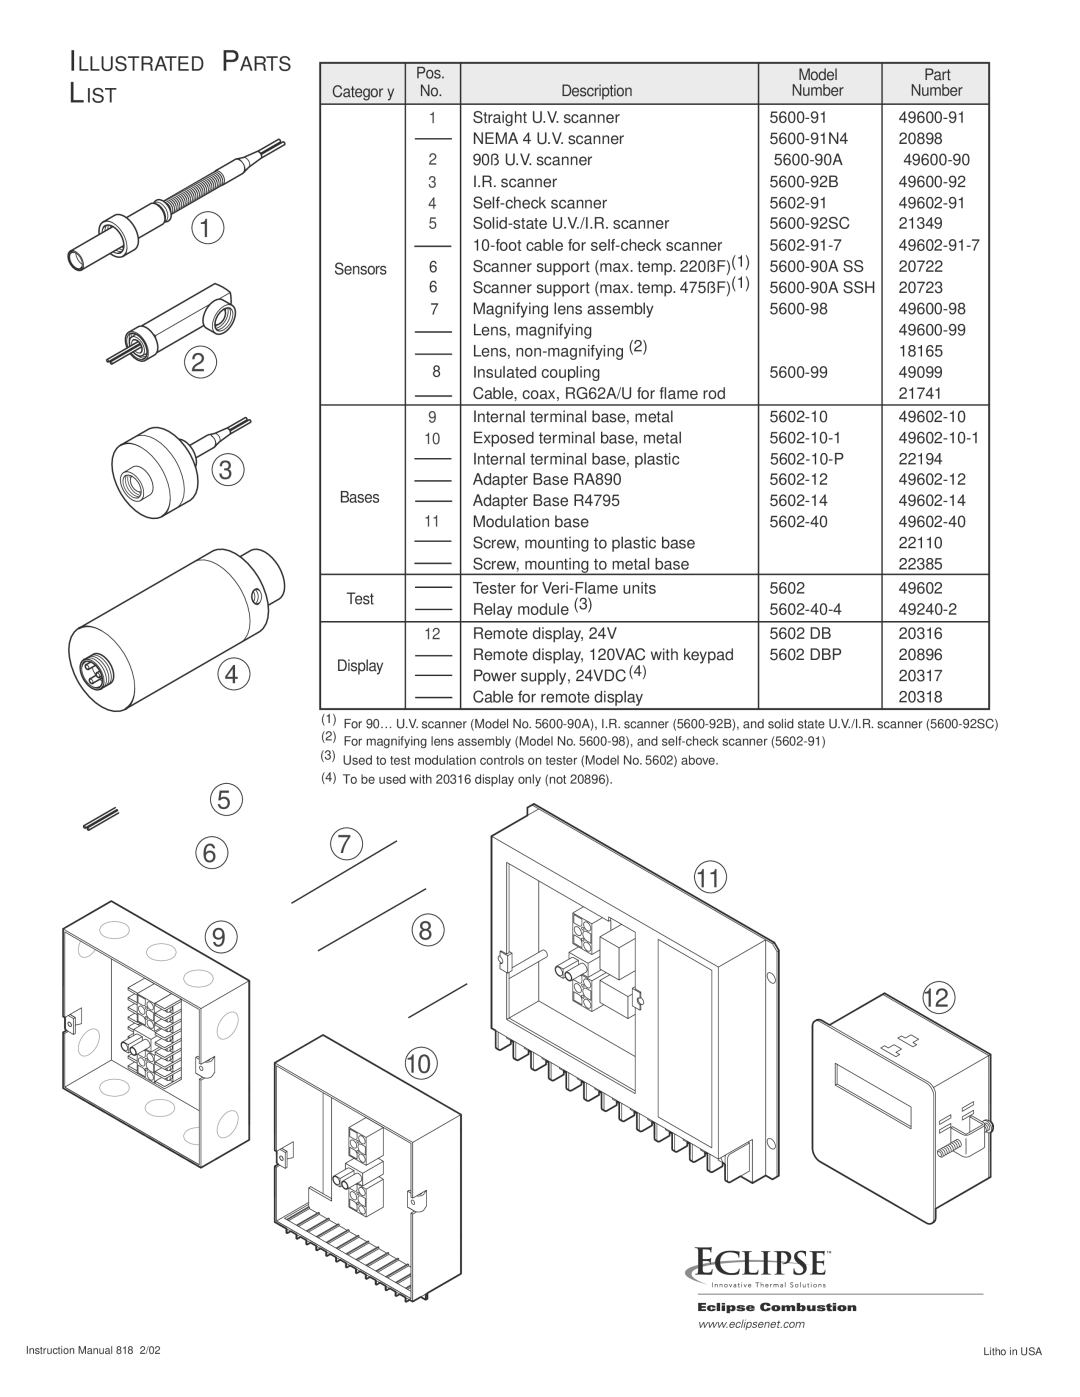 Eclipse Combustion 5600 instruction manual Illustrated Parts List, Pos Model Part Category Description Number 